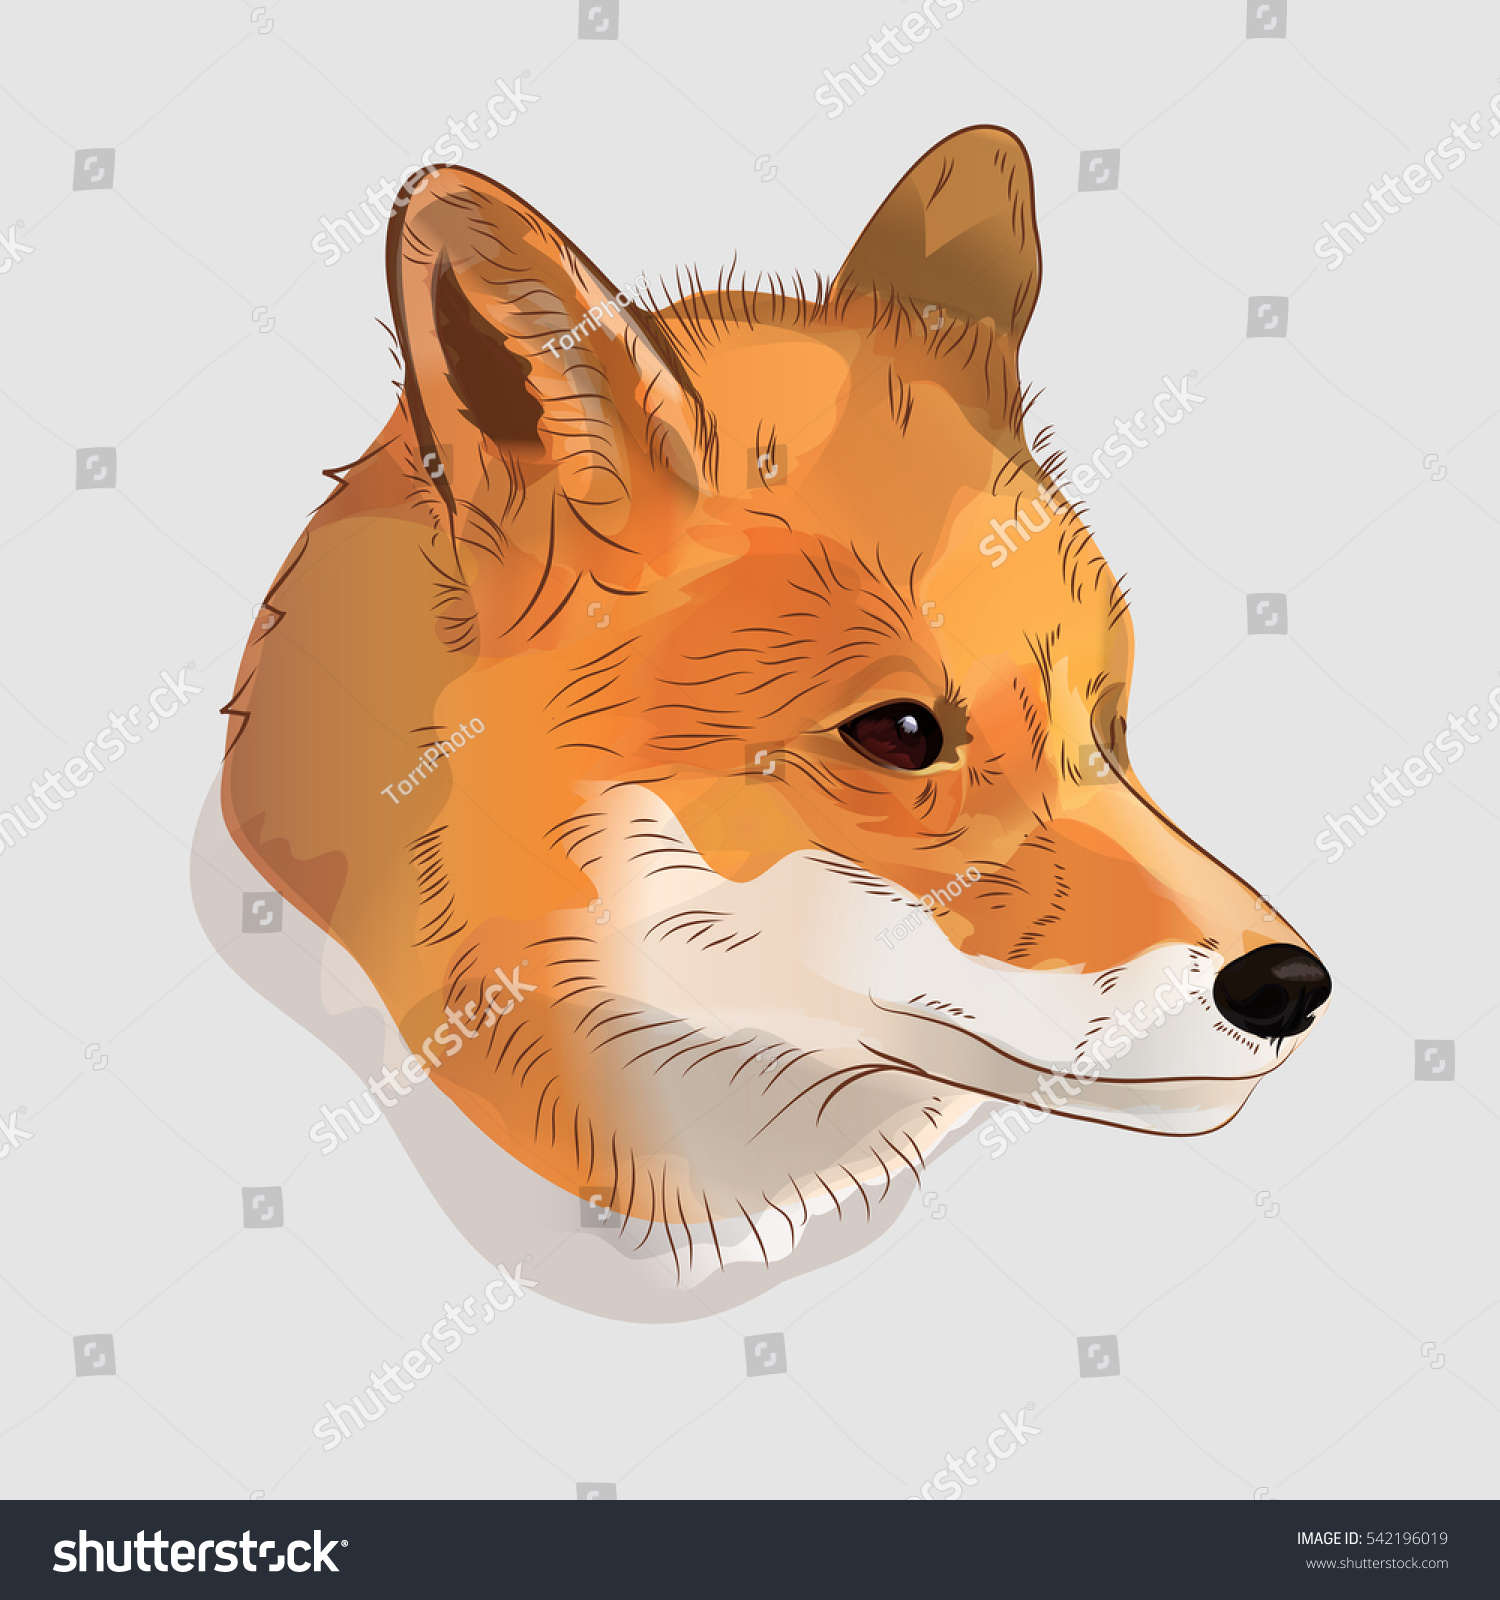 https://www.shutterstock.com/image-illustration/illustrative-portrait-red-fox-digital-illustration-542196019